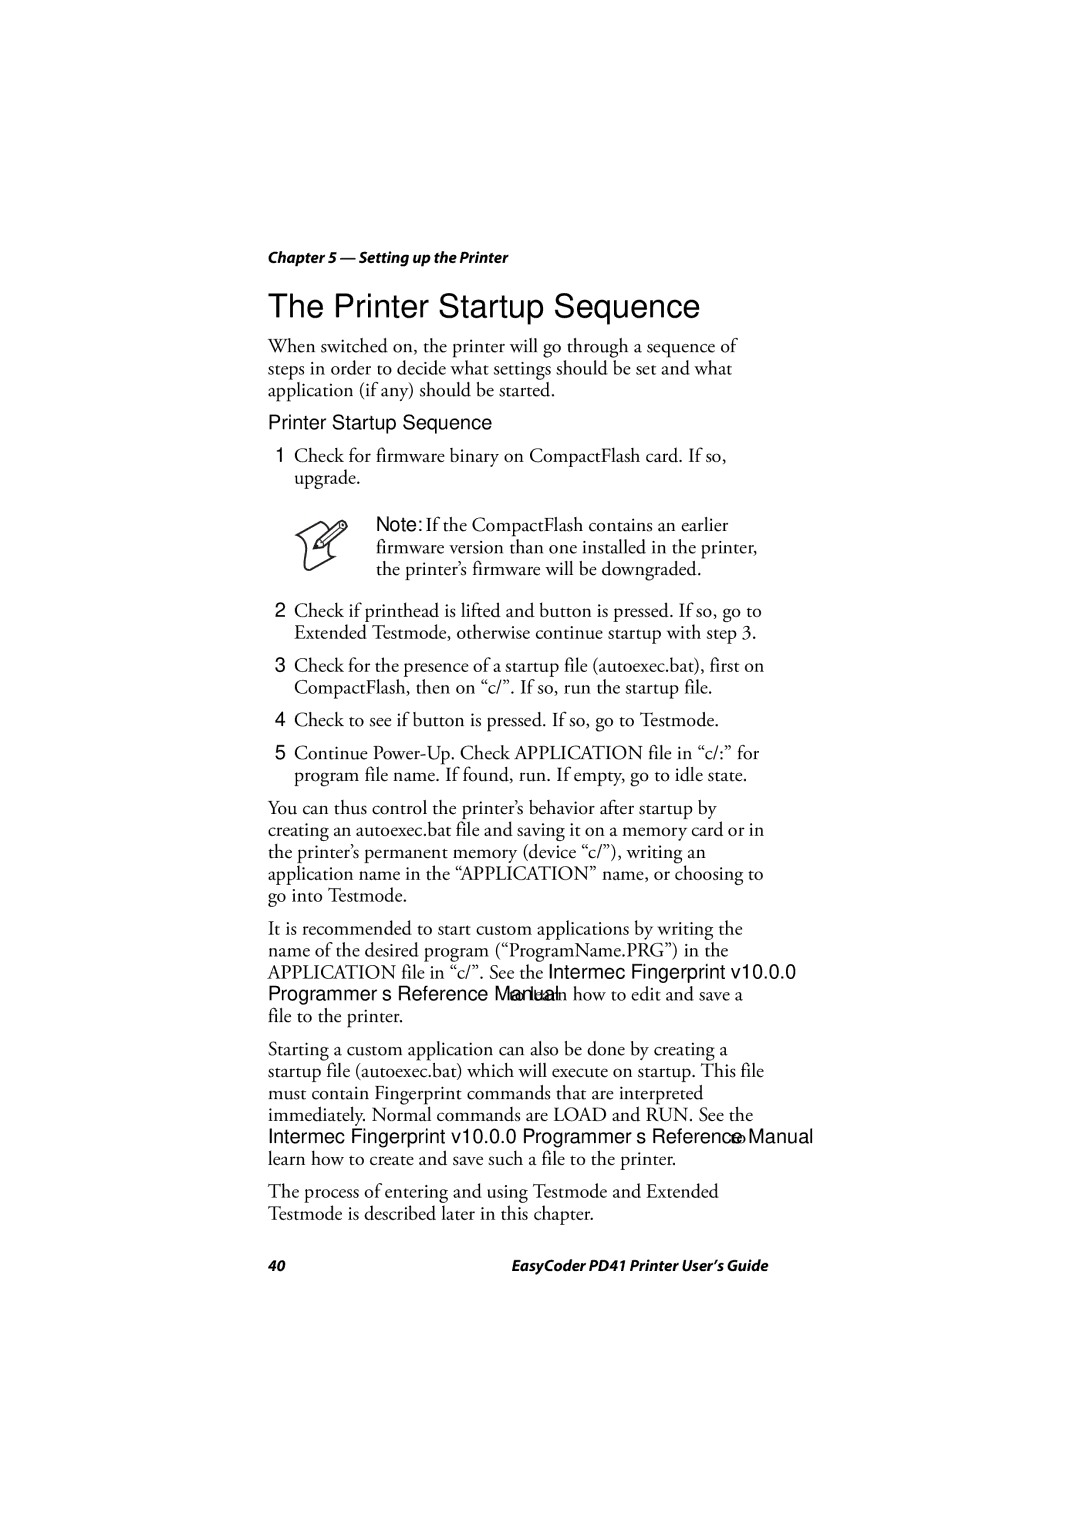 Intermec PD41 manual Printer Startup Sequence 